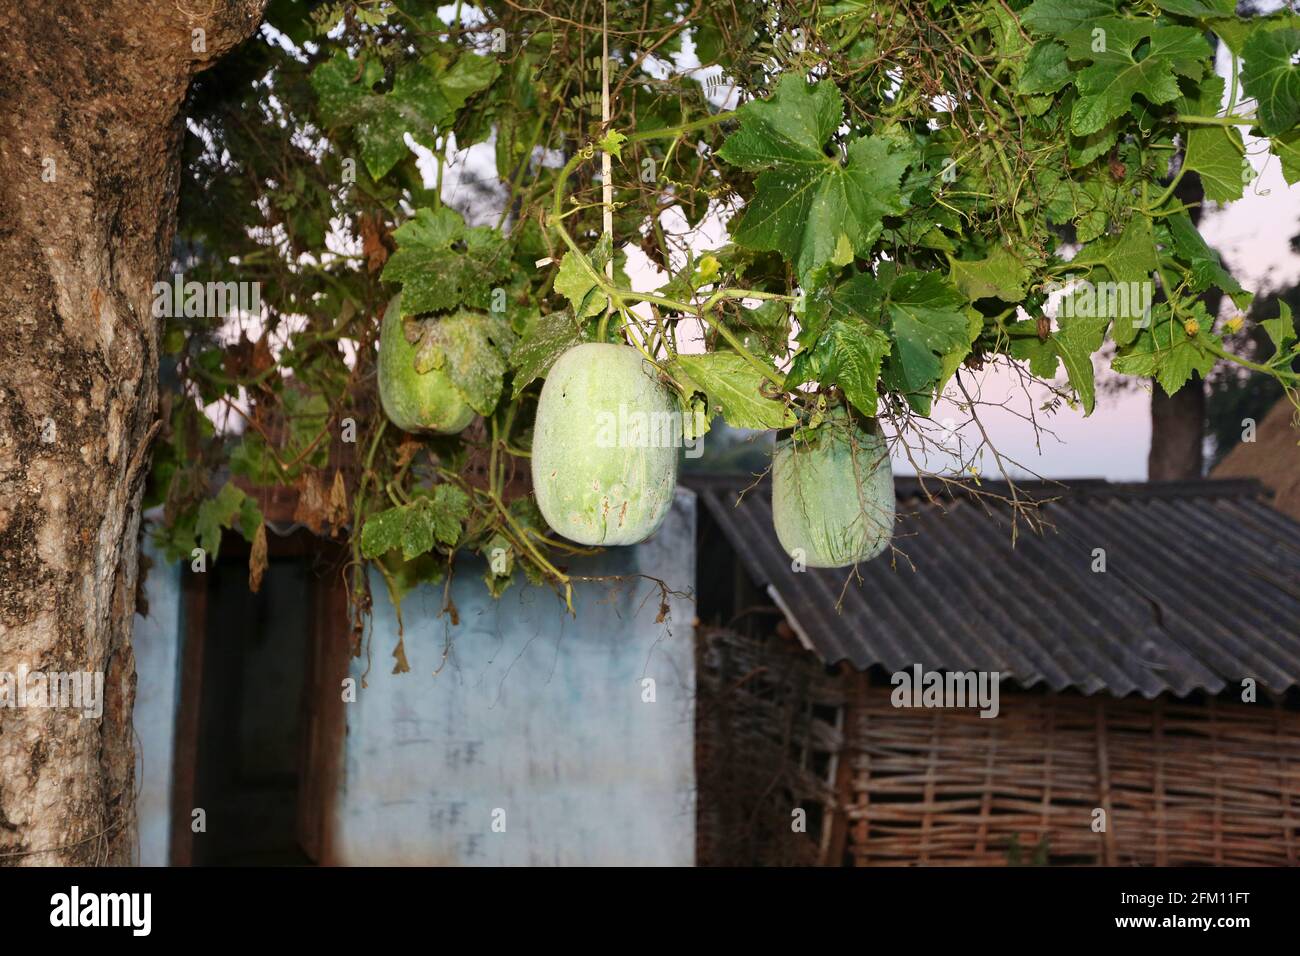 Arbre fruitier de longan (Kohala) arbre fruitier tropical au village de Hattaguda, Andhra Pradesh, Inde Banque D'Images